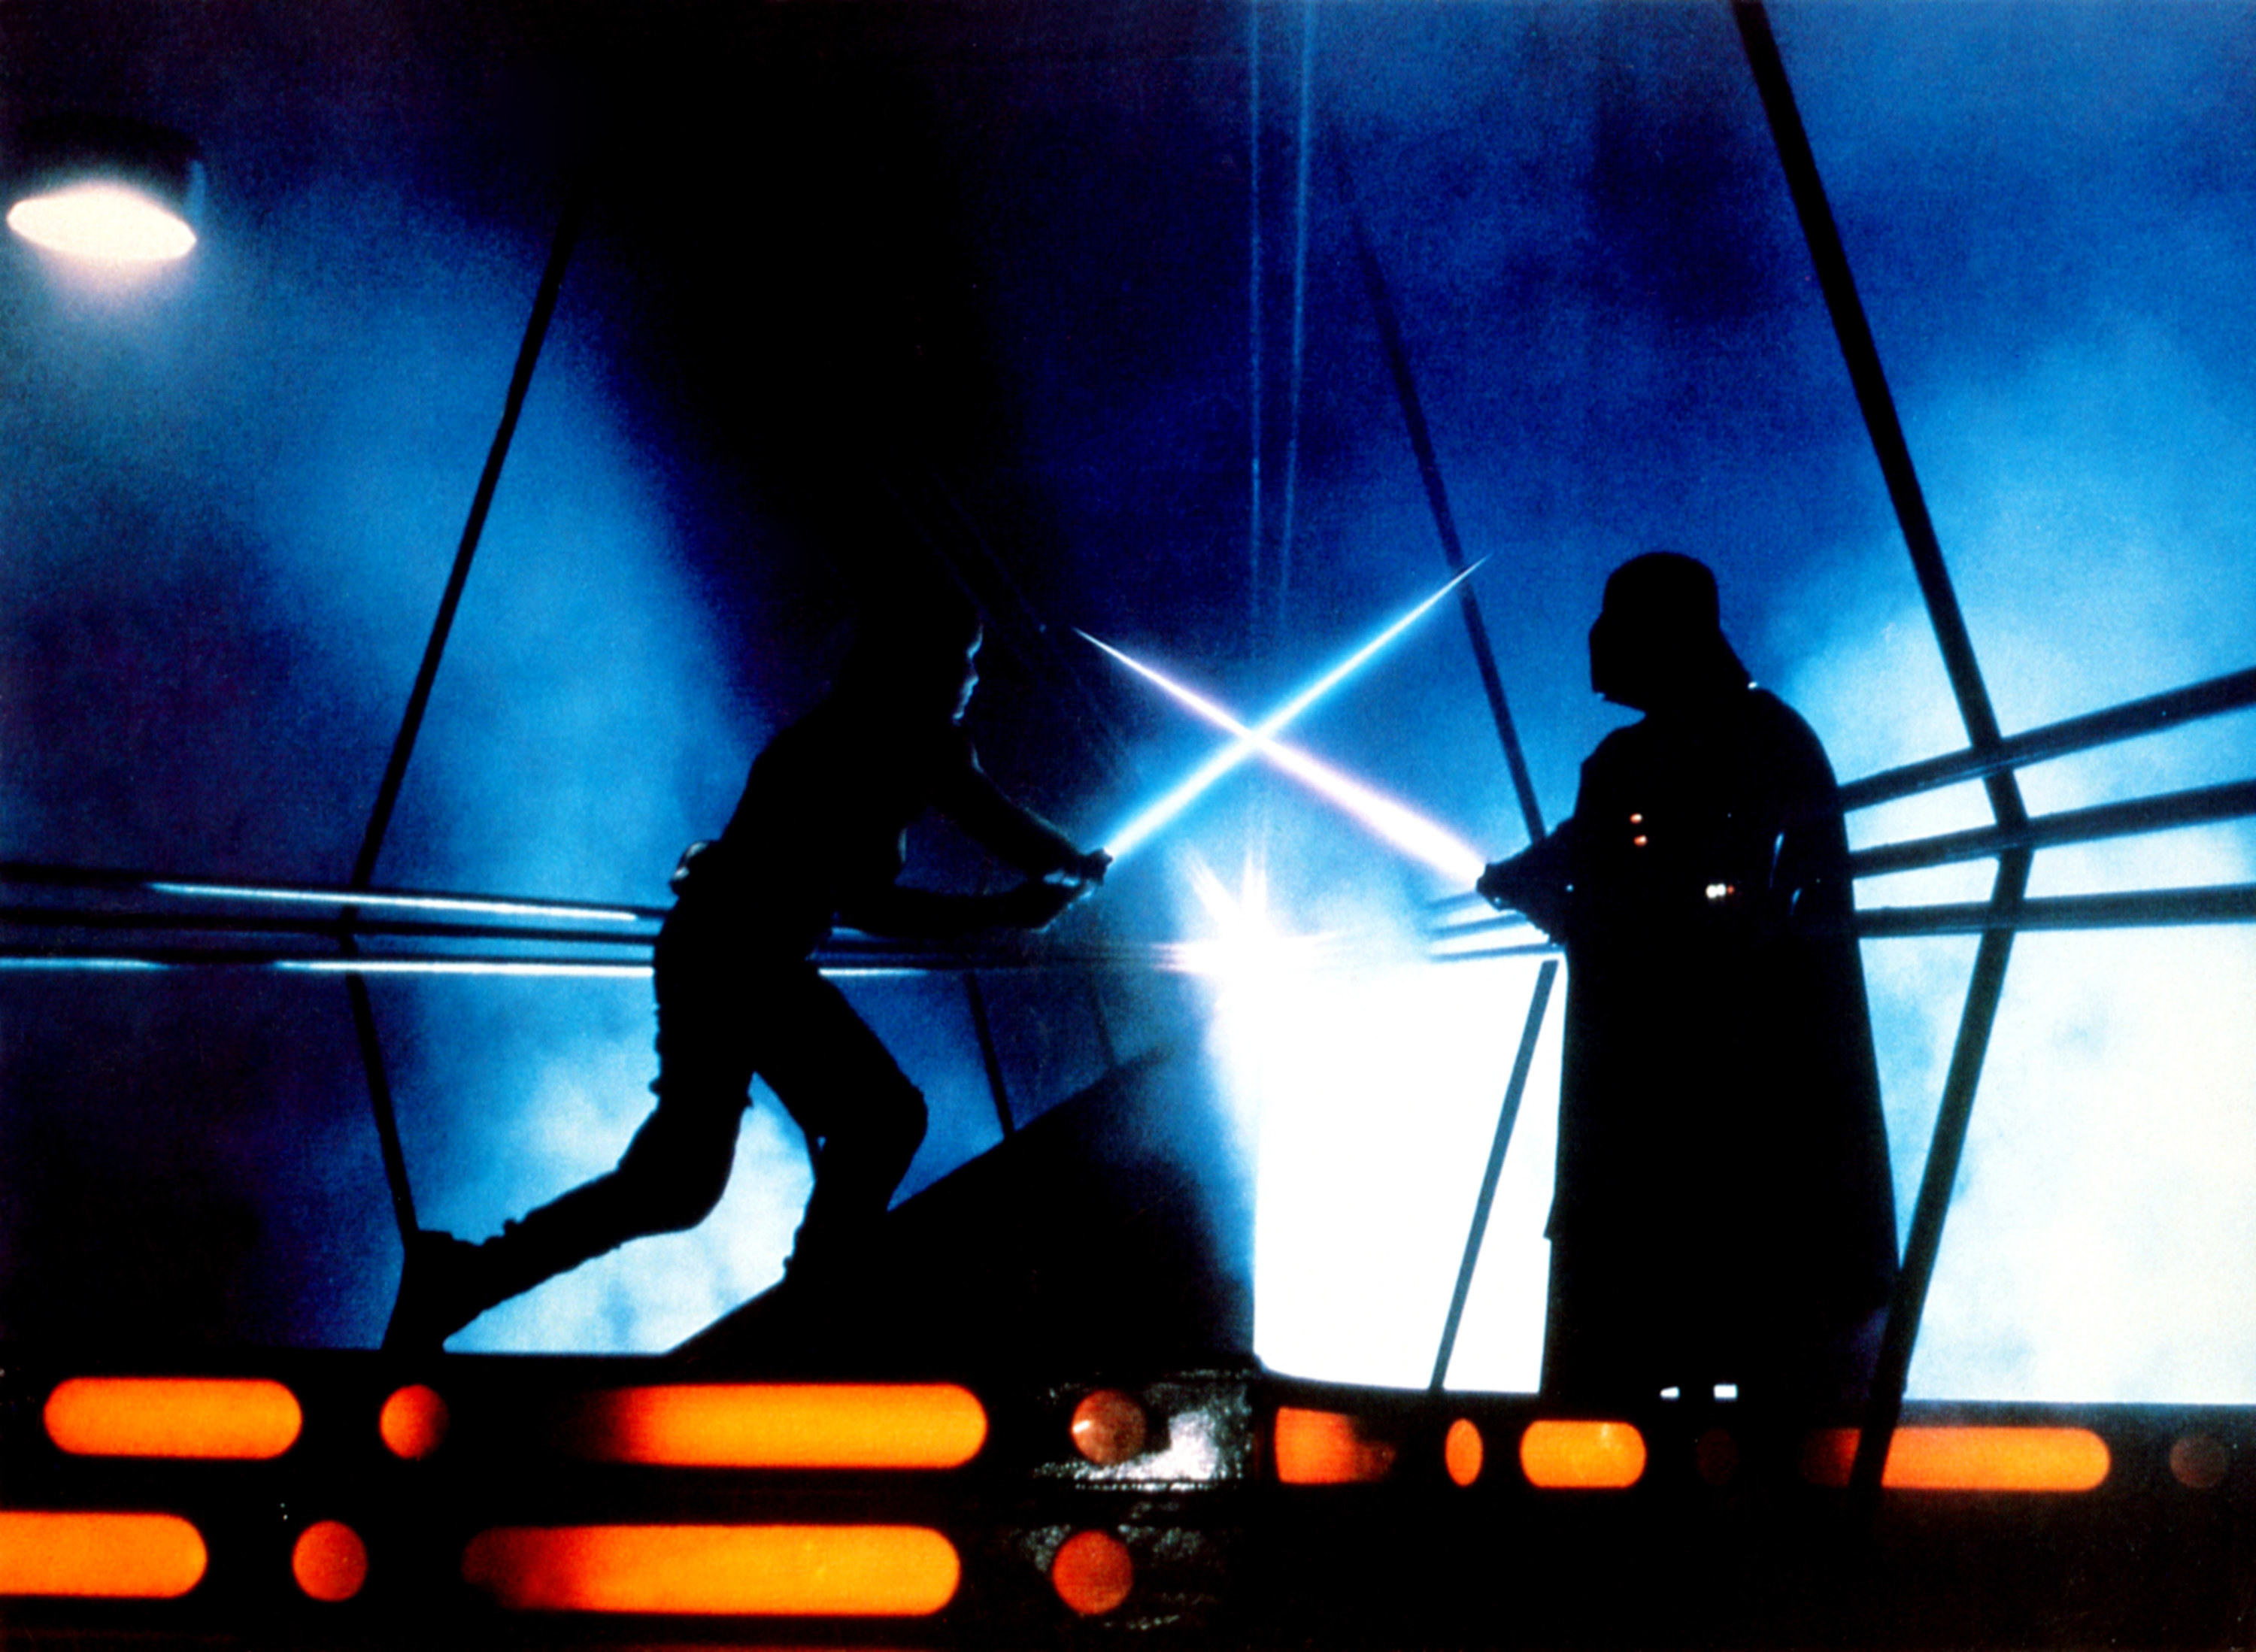 Luke Skywalker fights Darth Vader